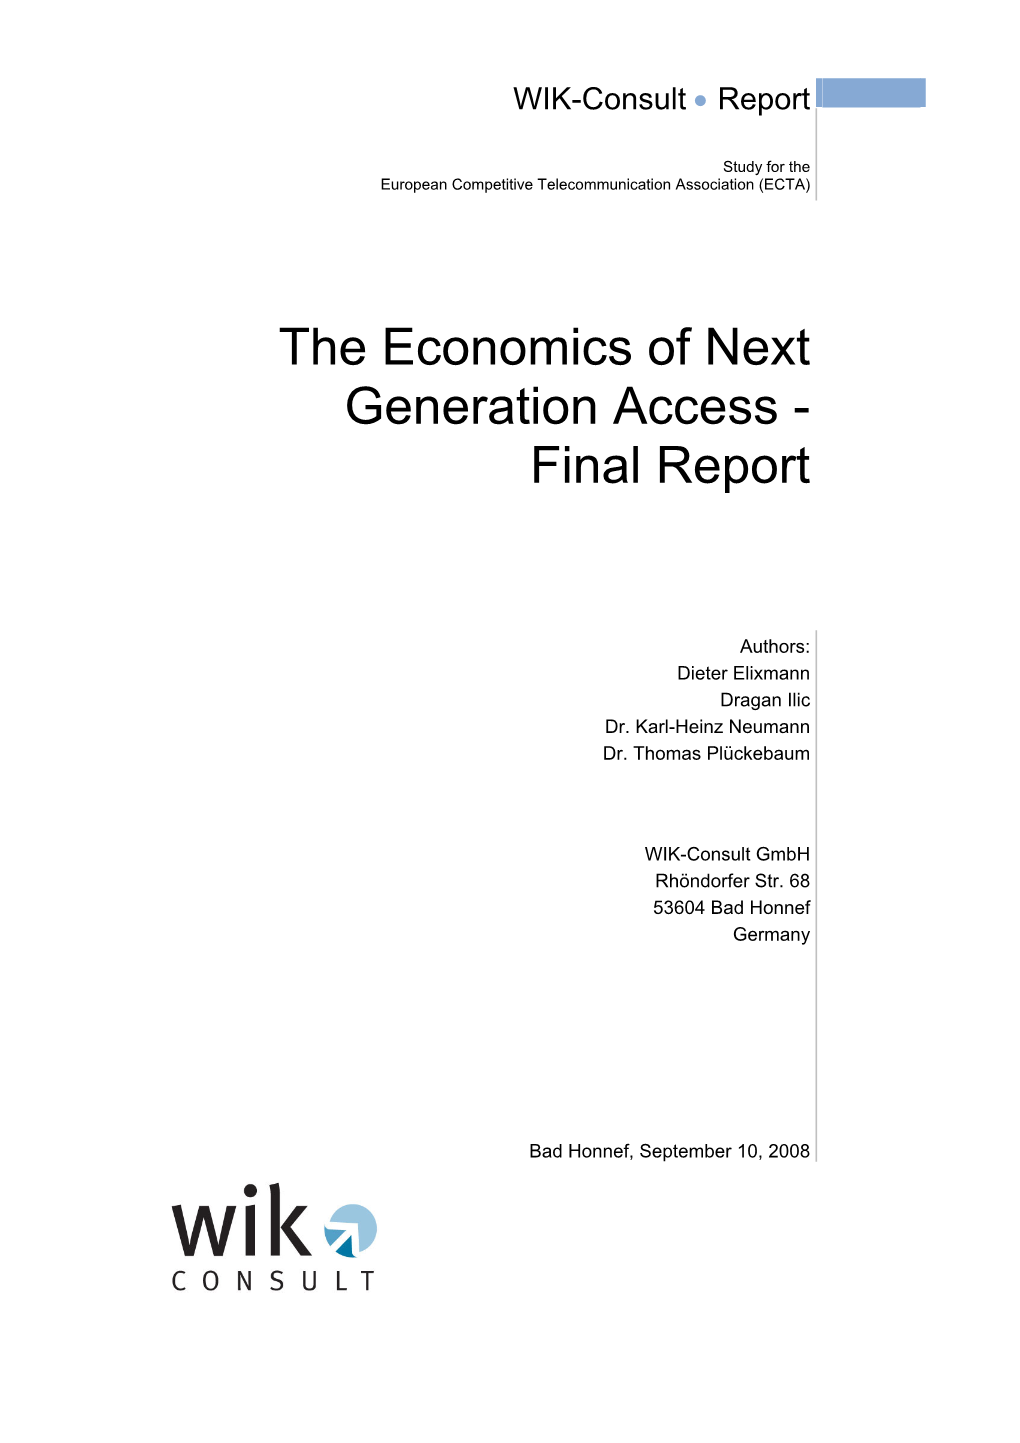 The Economics of Next Generation Access - Final Report